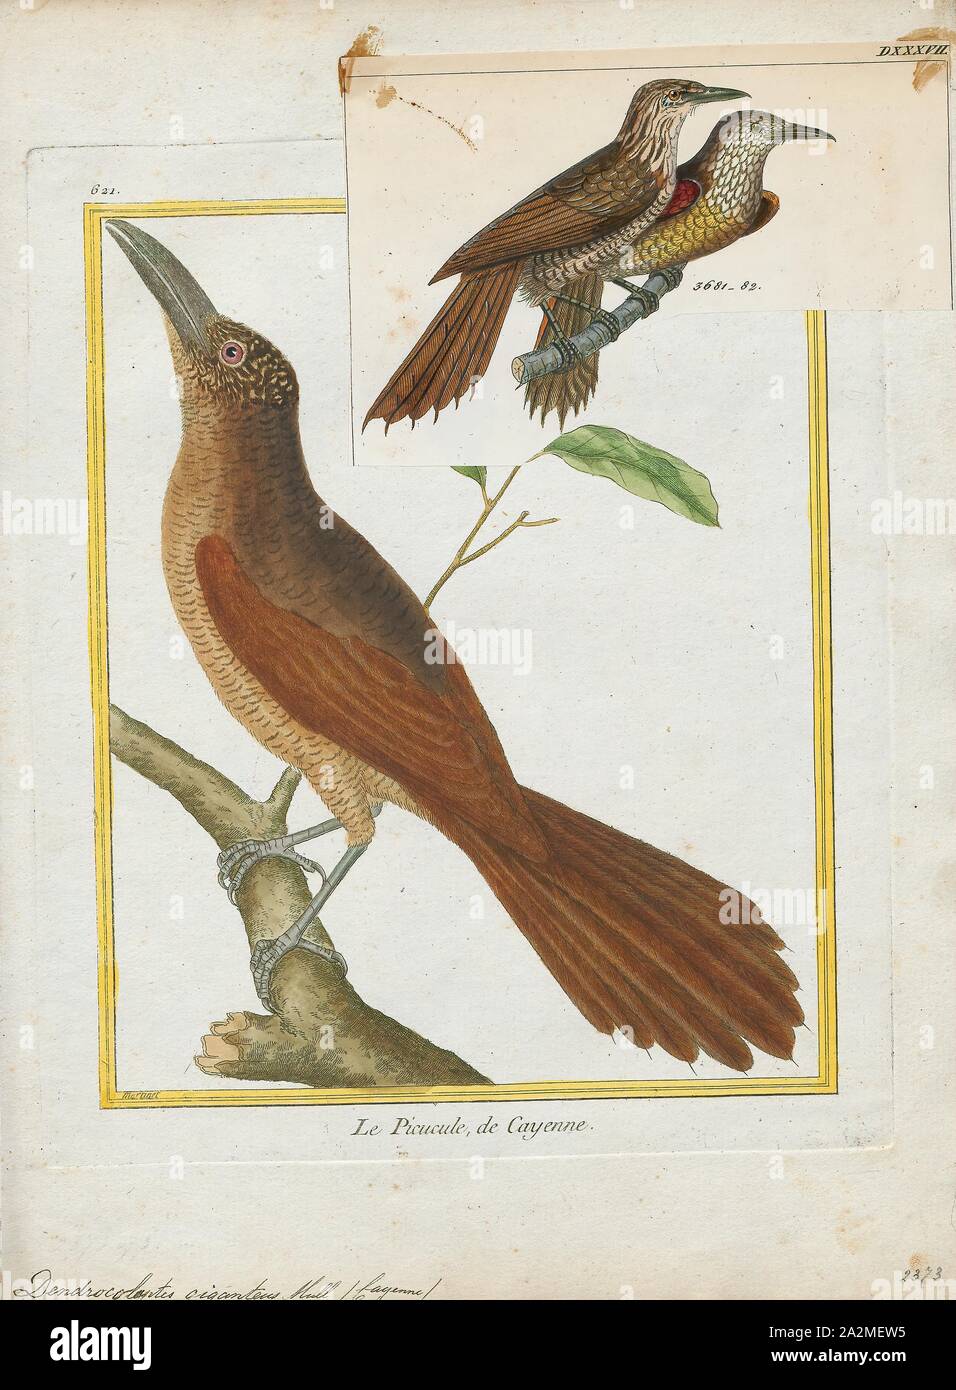 Dendrocolaptes giganteus, Print, Dendrocolaptes is a genus of Neotropical birds in the Dendrocolaptinae subfamily., 1700-1880 Stock Photo